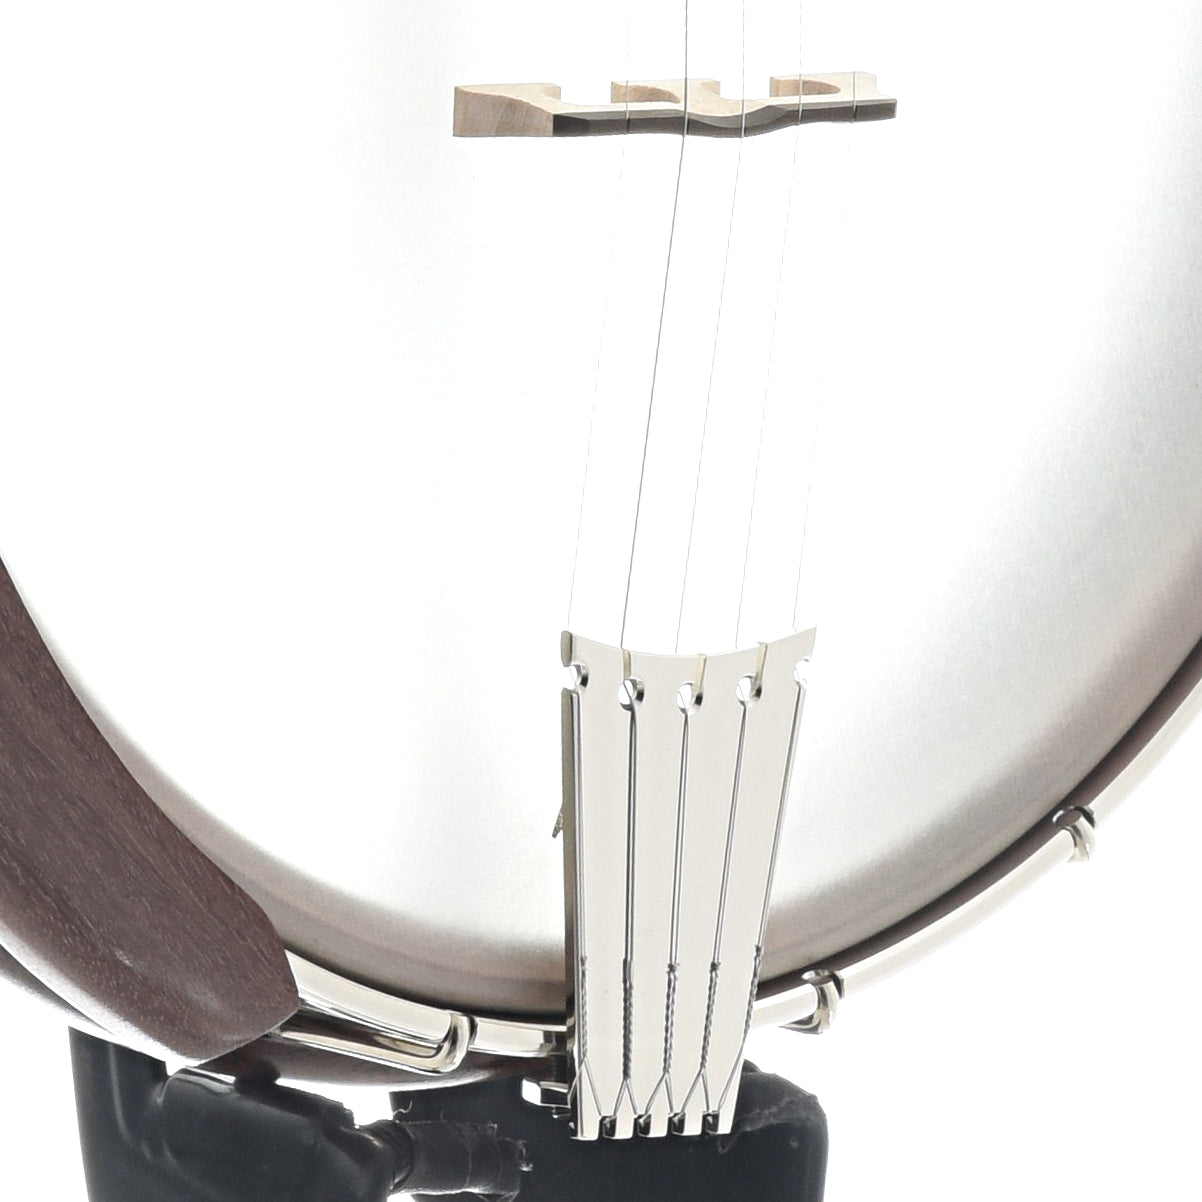 Image 4 of Nechville Atlas Deluxe Openback Banjo & Case - SKU# NATLASDLX : Product Type Open Back Banjos : Elderly Instruments